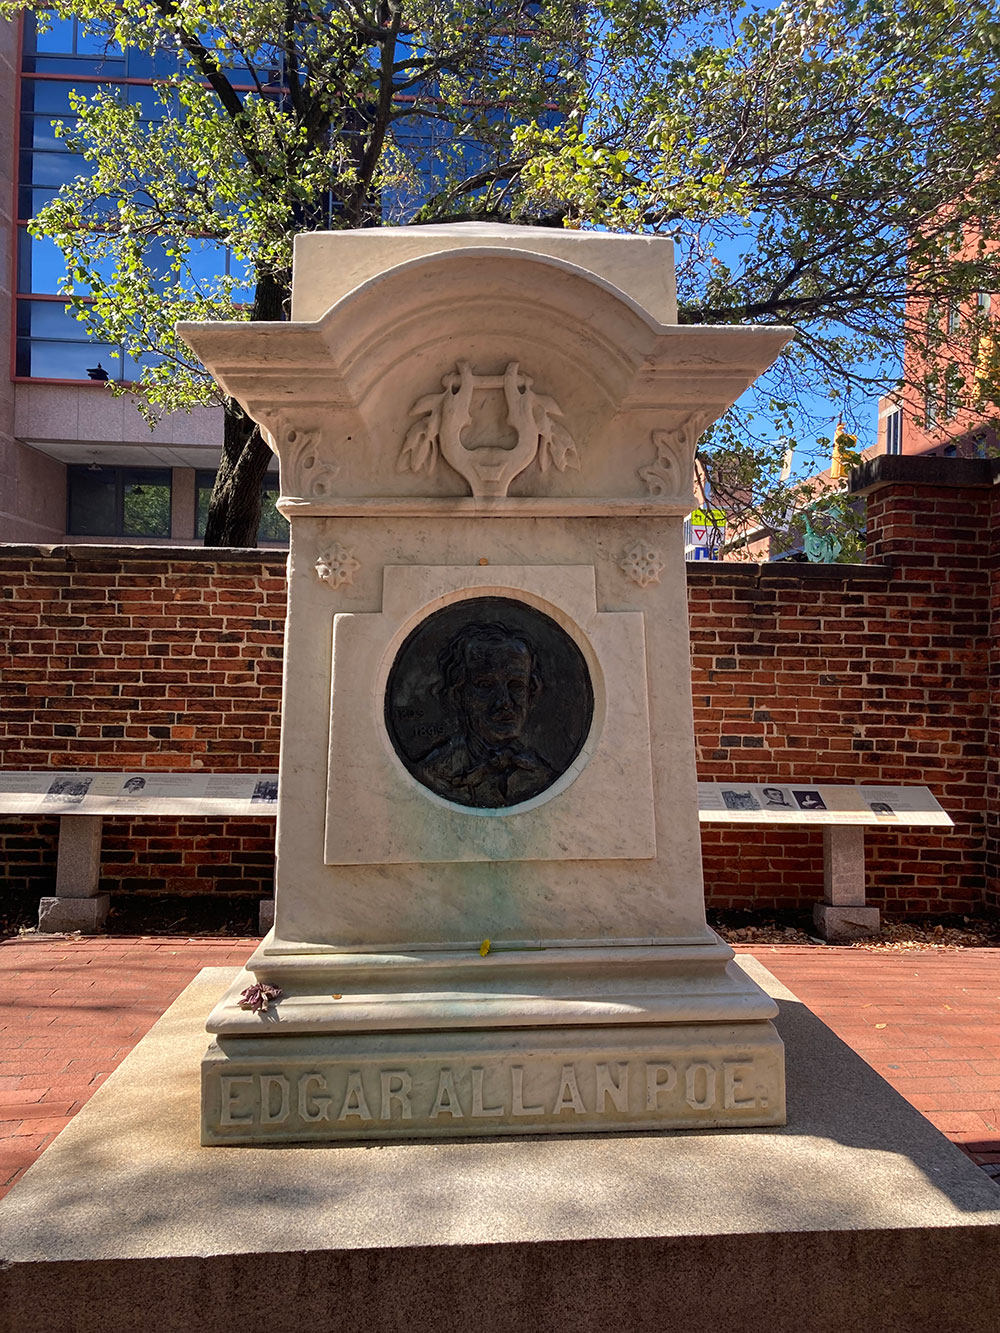 Things to Do in Baltimore: Edgar Allan Poe Grave